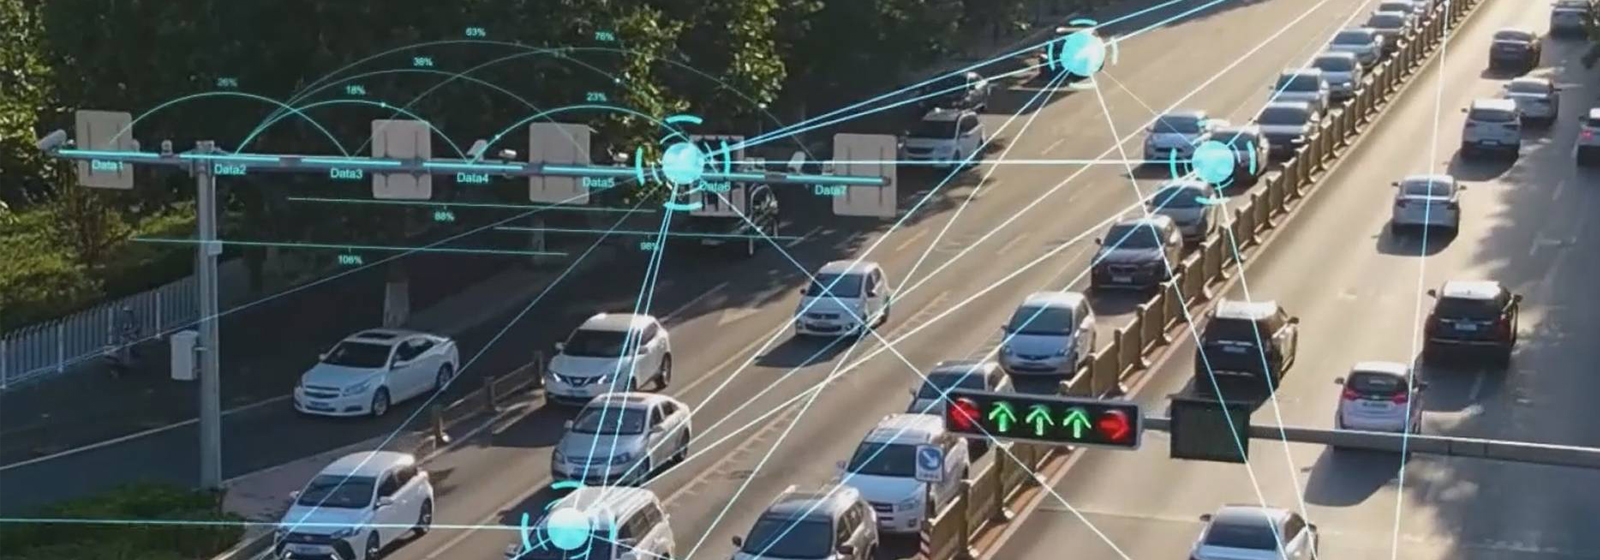 Intelligent traffic light system